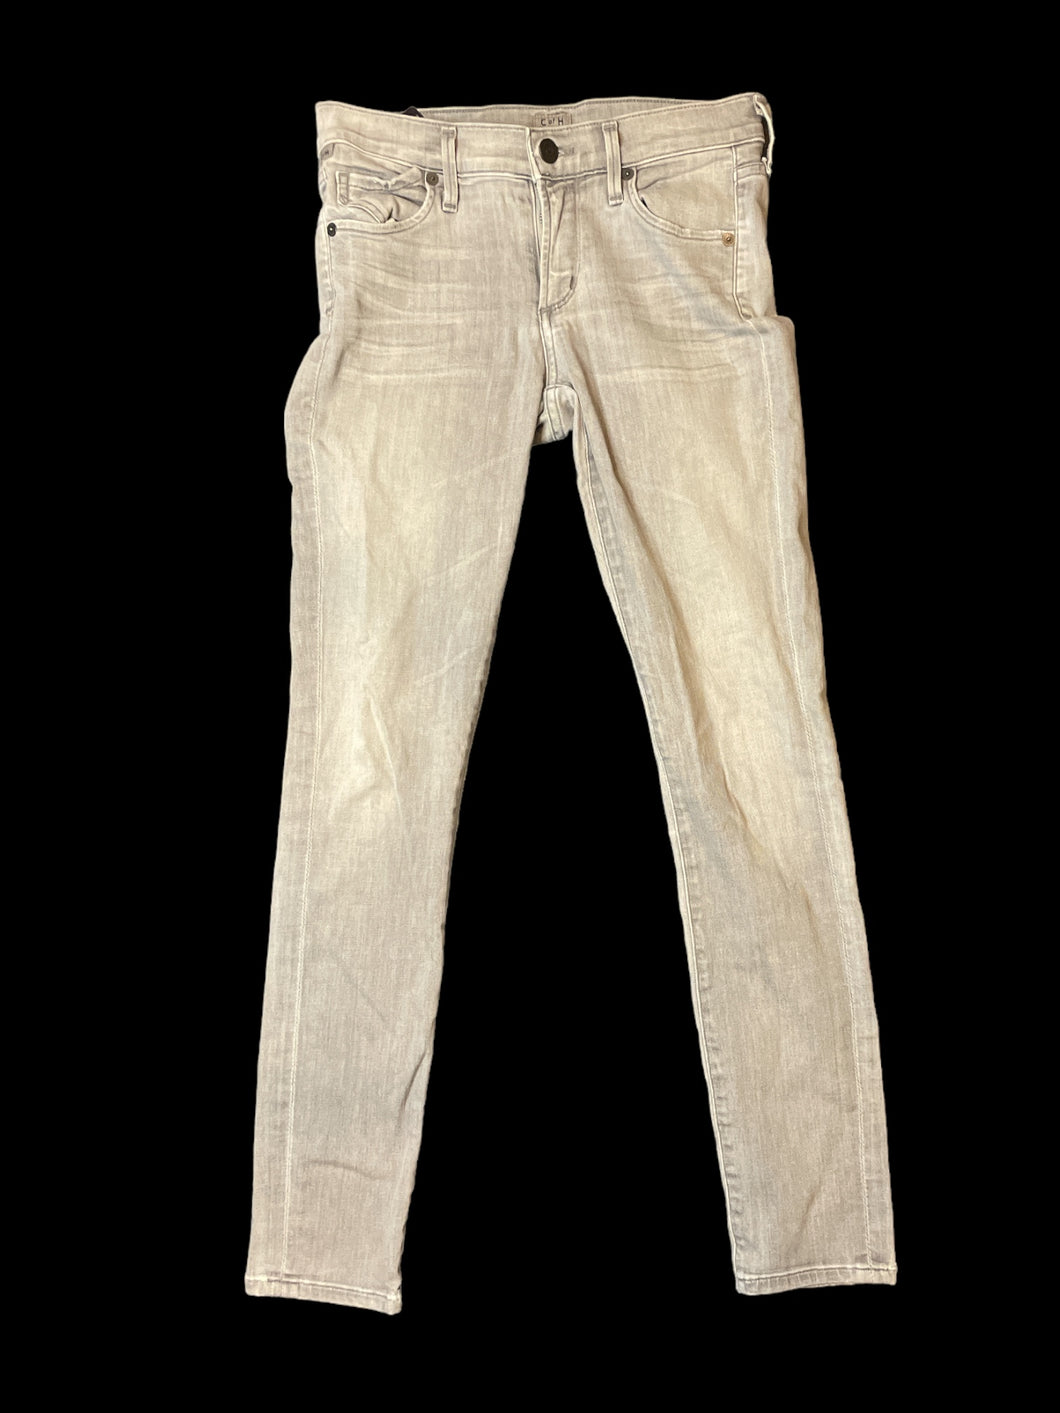 XS Light grey denim jeans w/ pockets, belt loops, & zipper/button closure